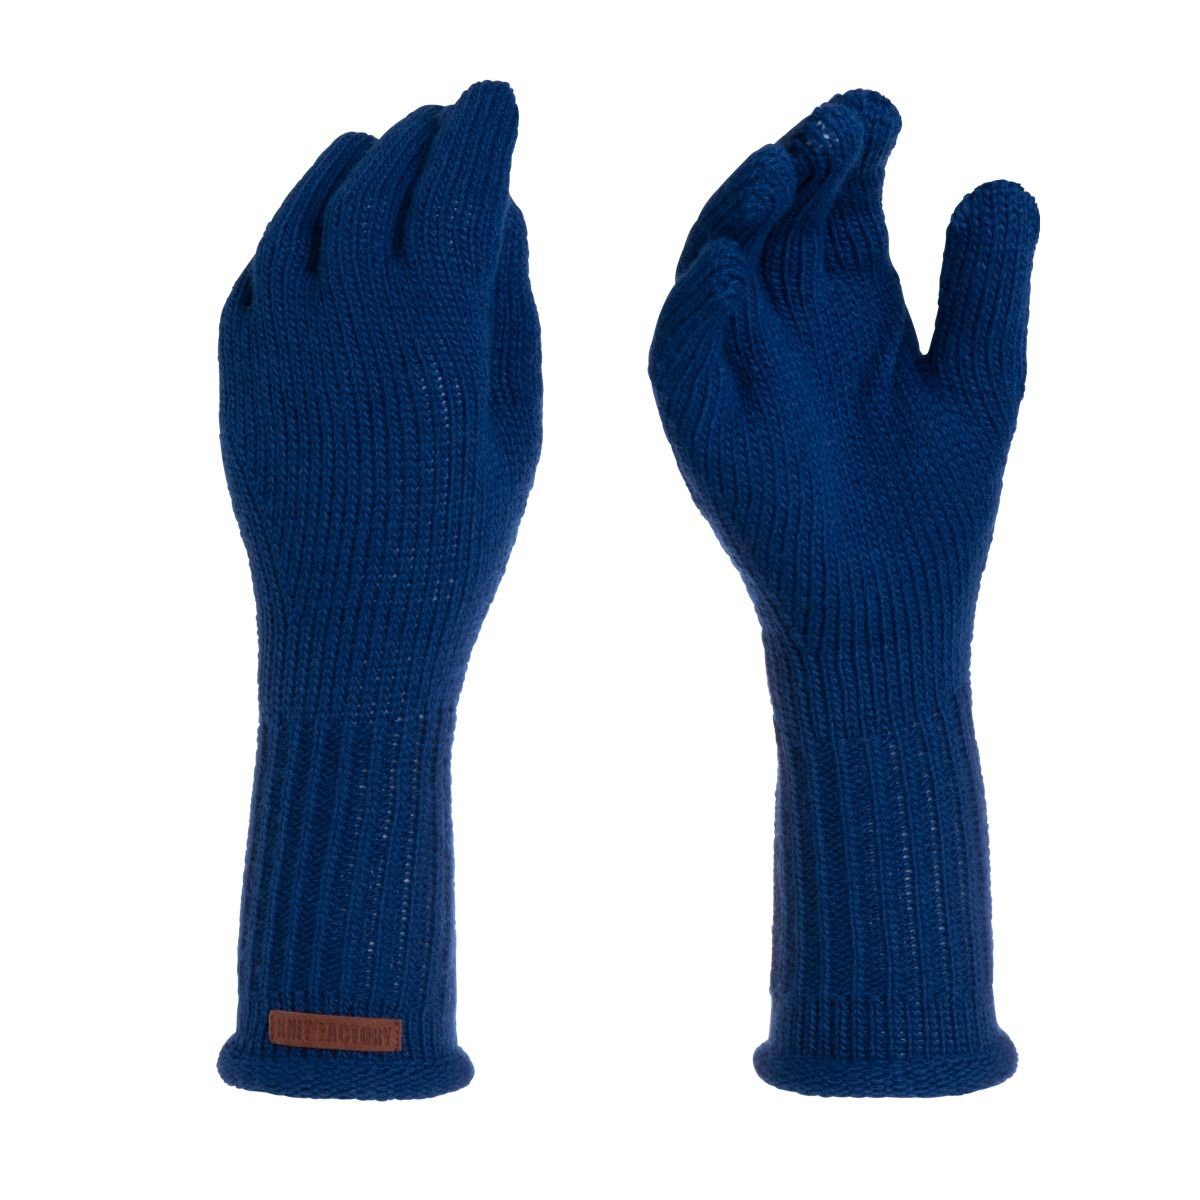 Knit Factory Strickhandschuhe Lana Handschuhe Handstulpen Handschuhe Dunkelblau Size ihne Glatt Handschuhe One Finger